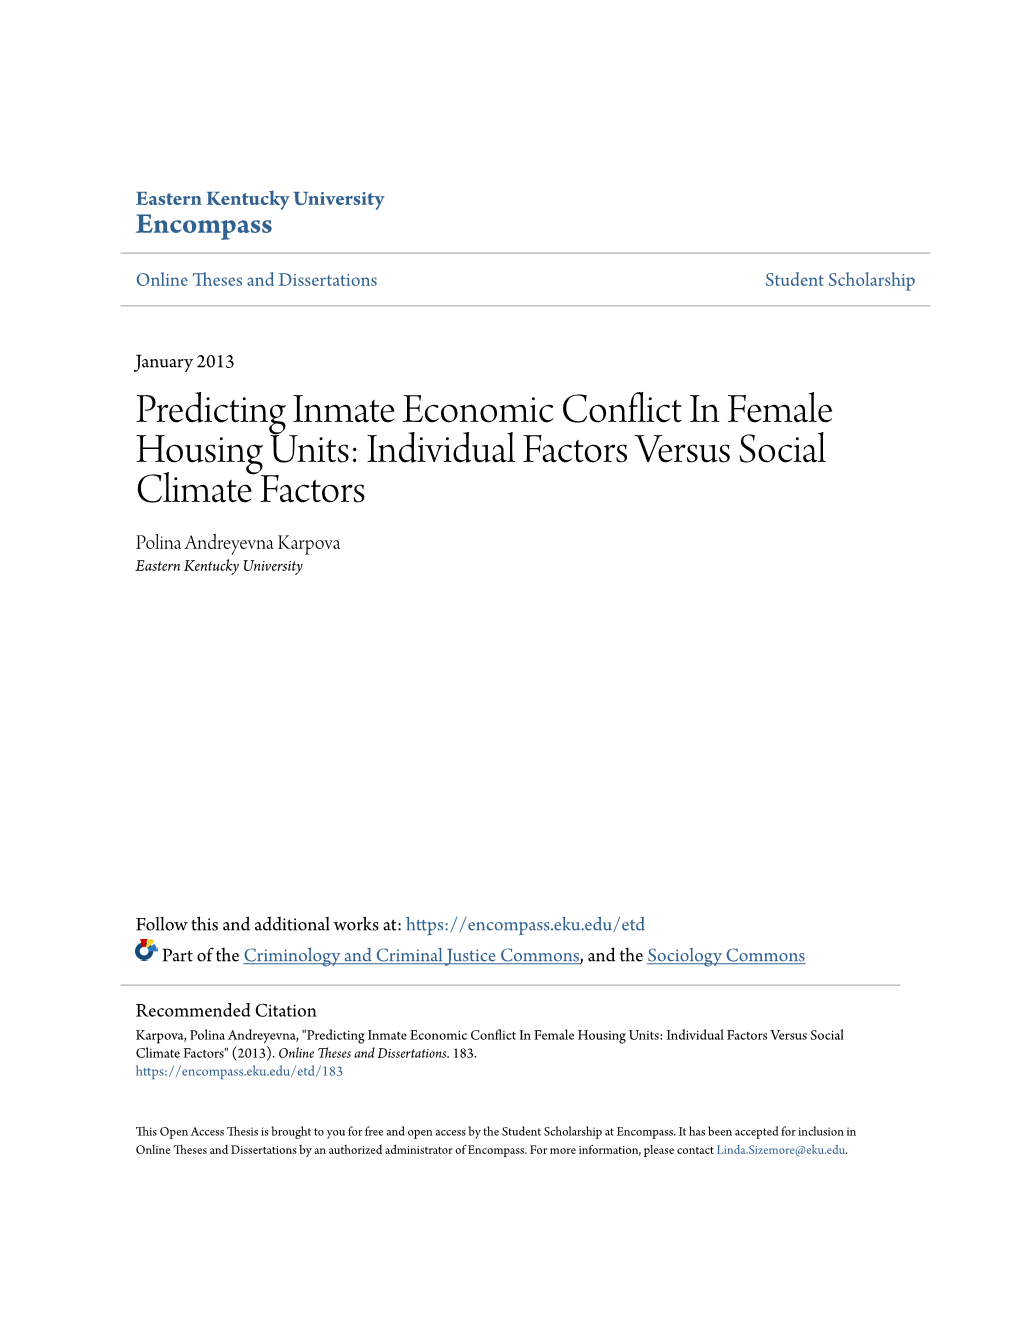 Predicting Inmate Economic Conflict in Female Housing Units: Individual Factors Versus Social Climate Factors Polina Andreyevna Karpova Eastern Kentucky University